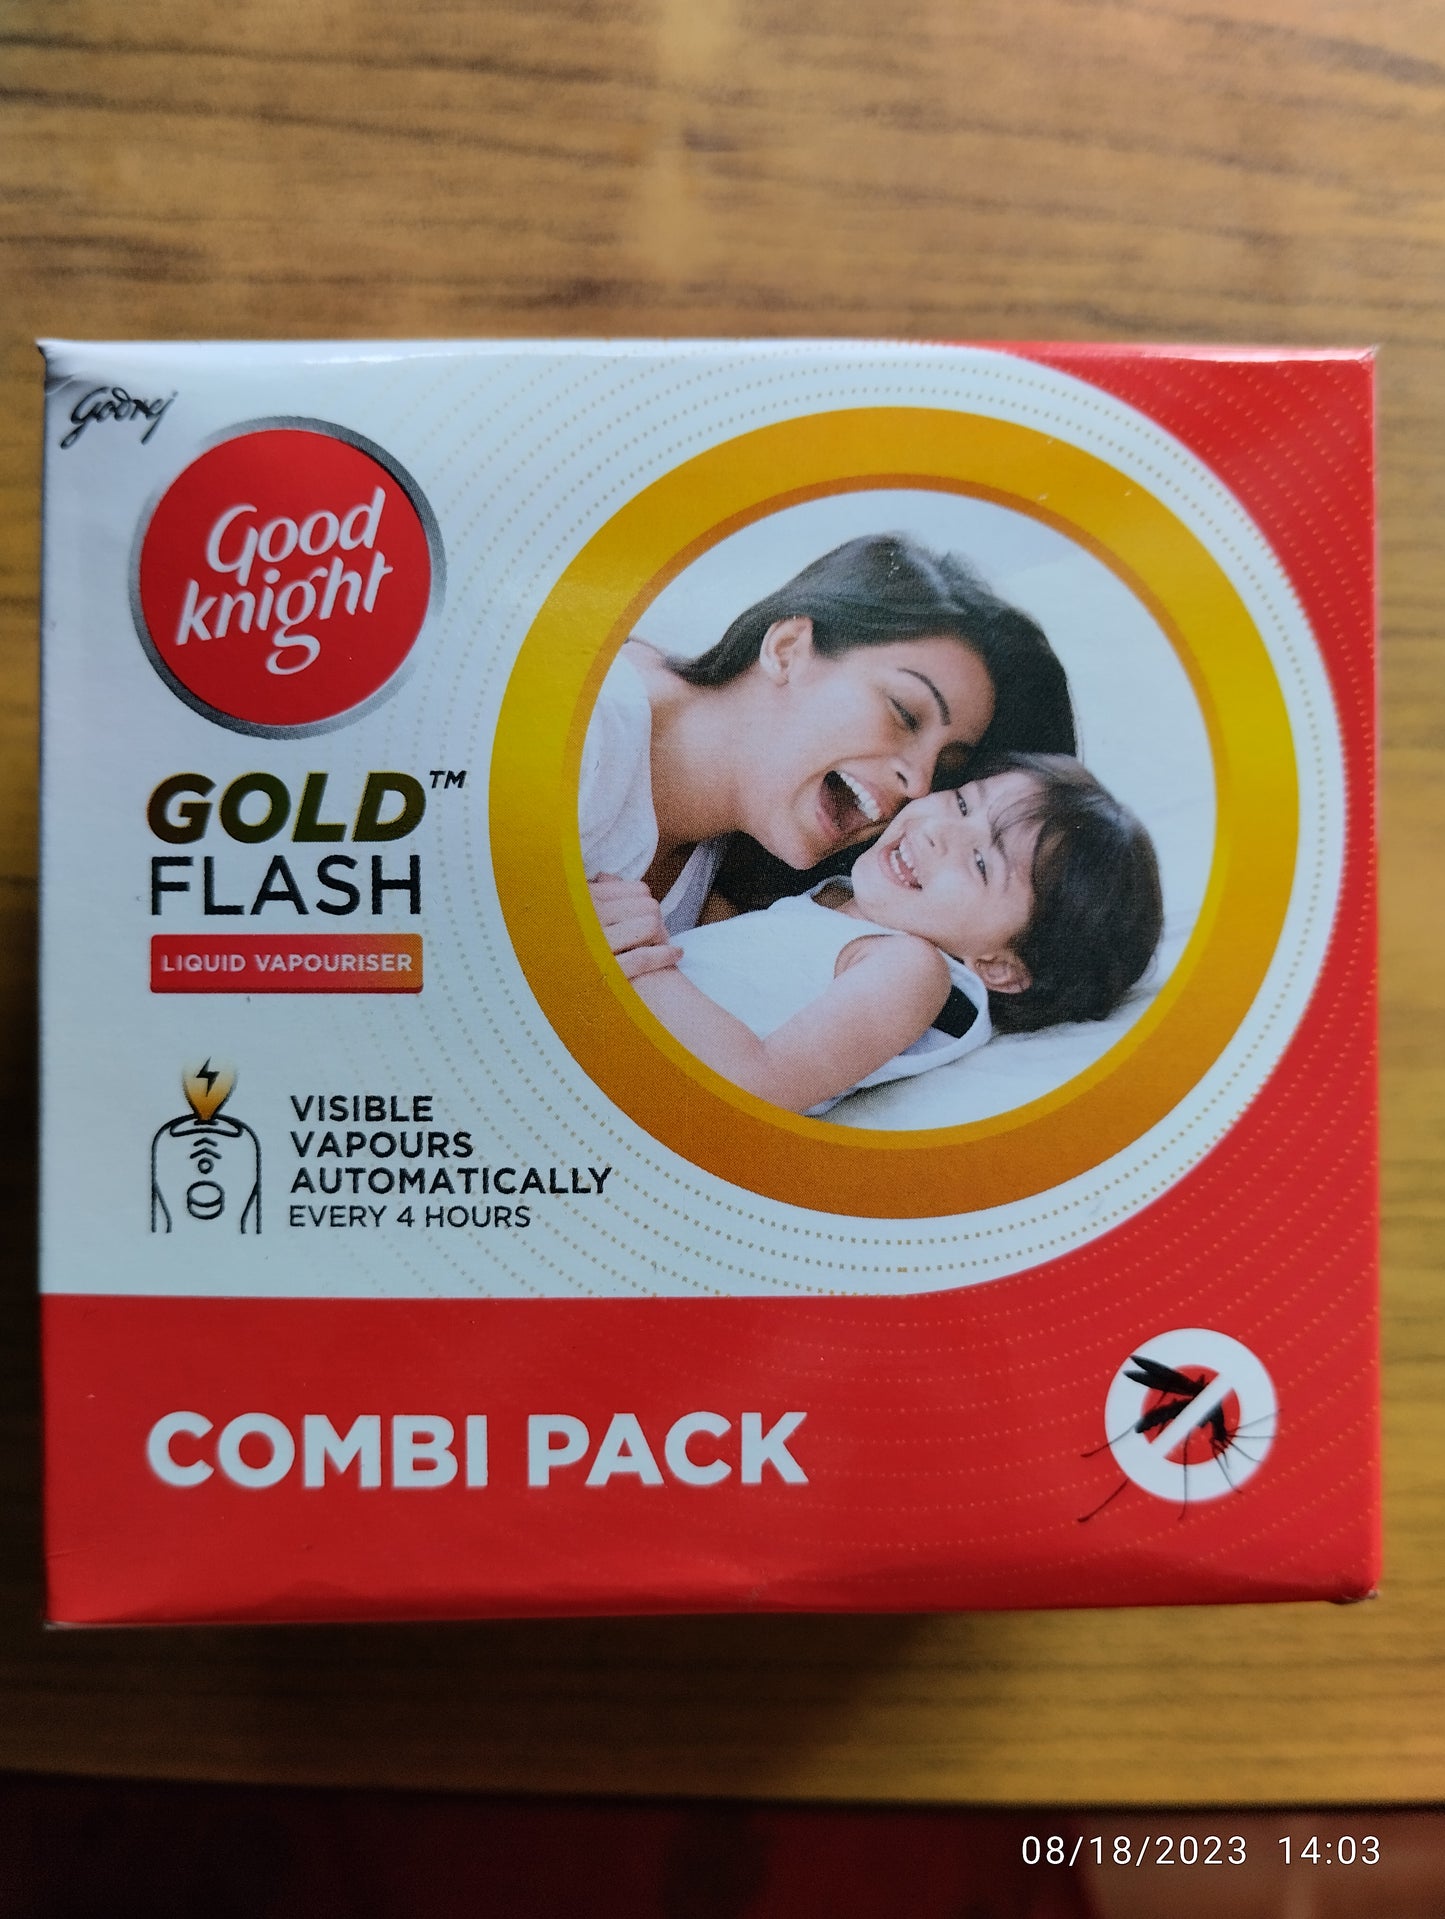 Good night - Gold flash COMBI PACK